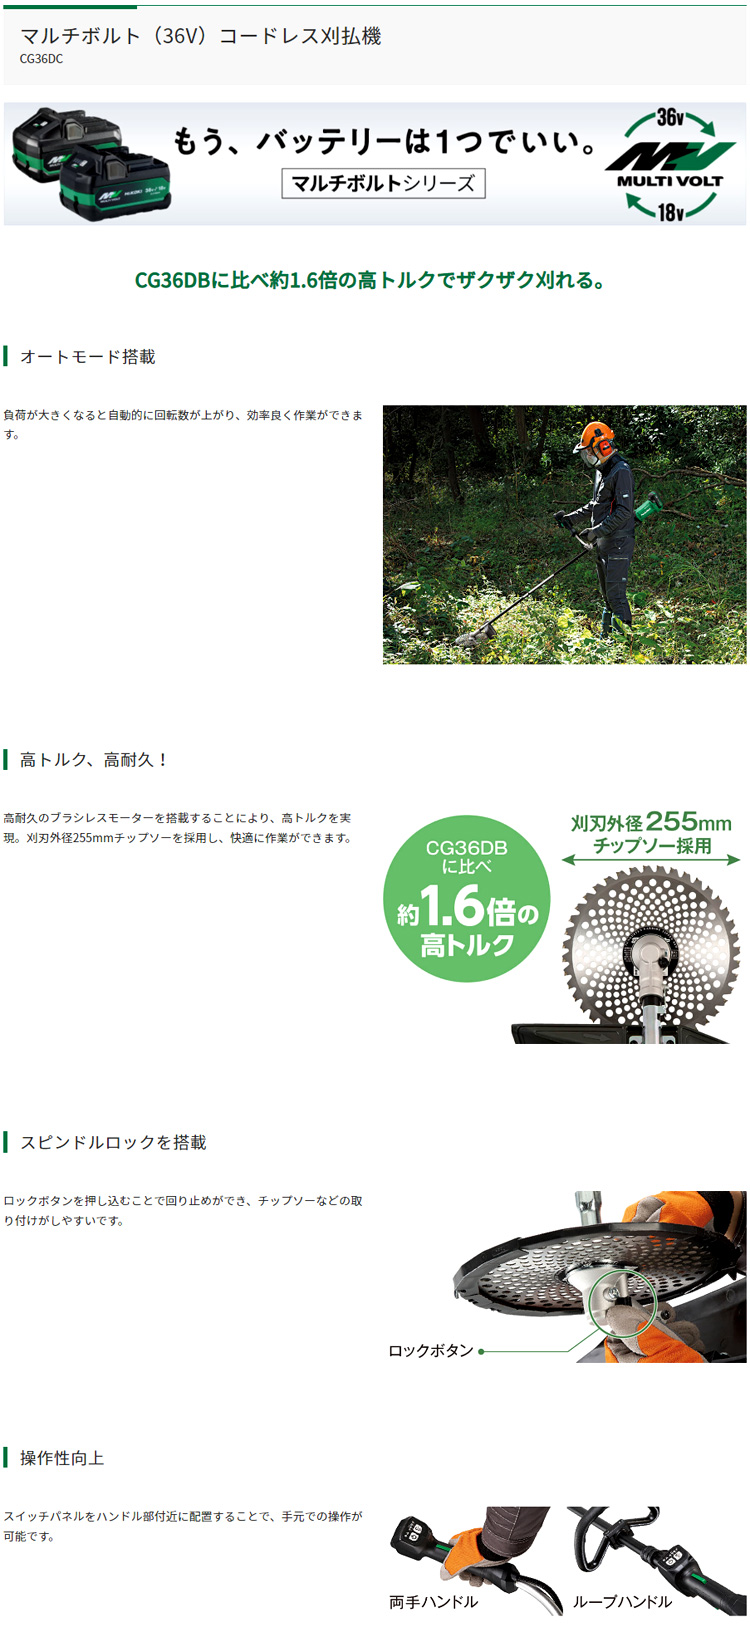 76%OFF!】 HiKOKI ハイコーキ CG36DC NN 36Vコードレス刈払機 両手ハンドルマルチボルト